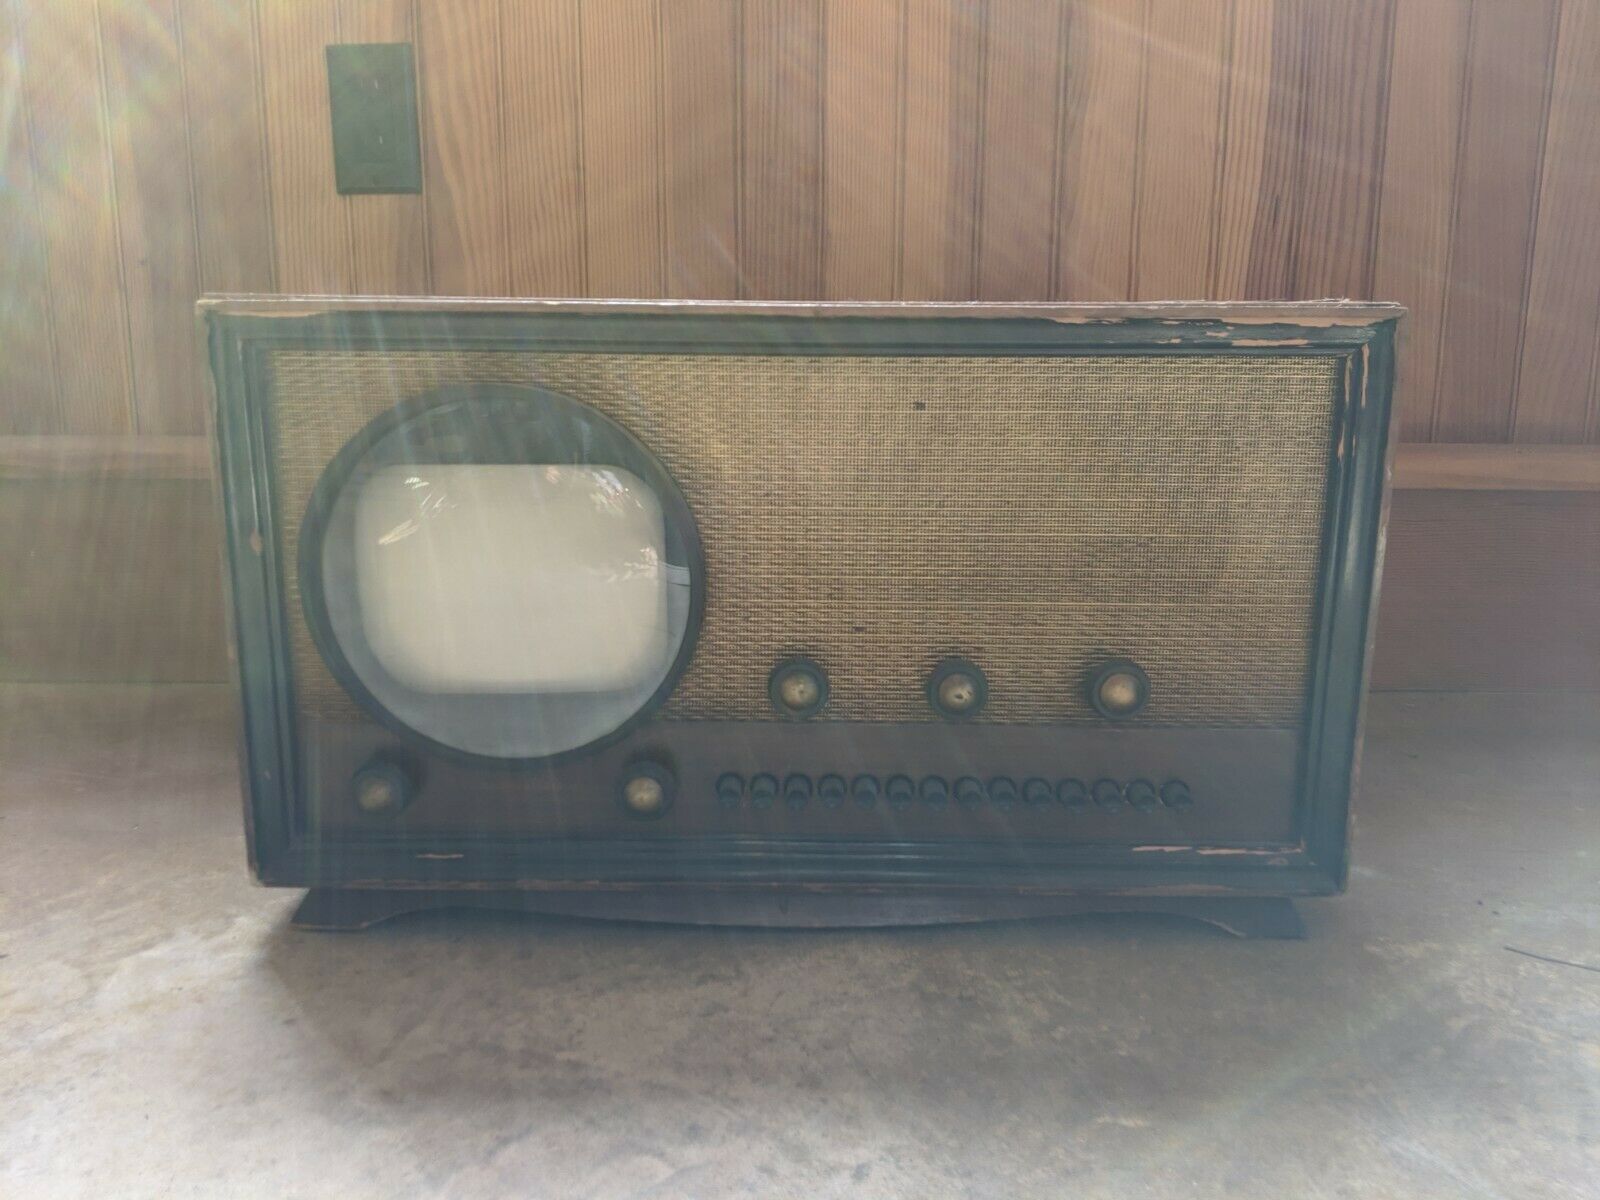 Hallicrafters Vintage console TV